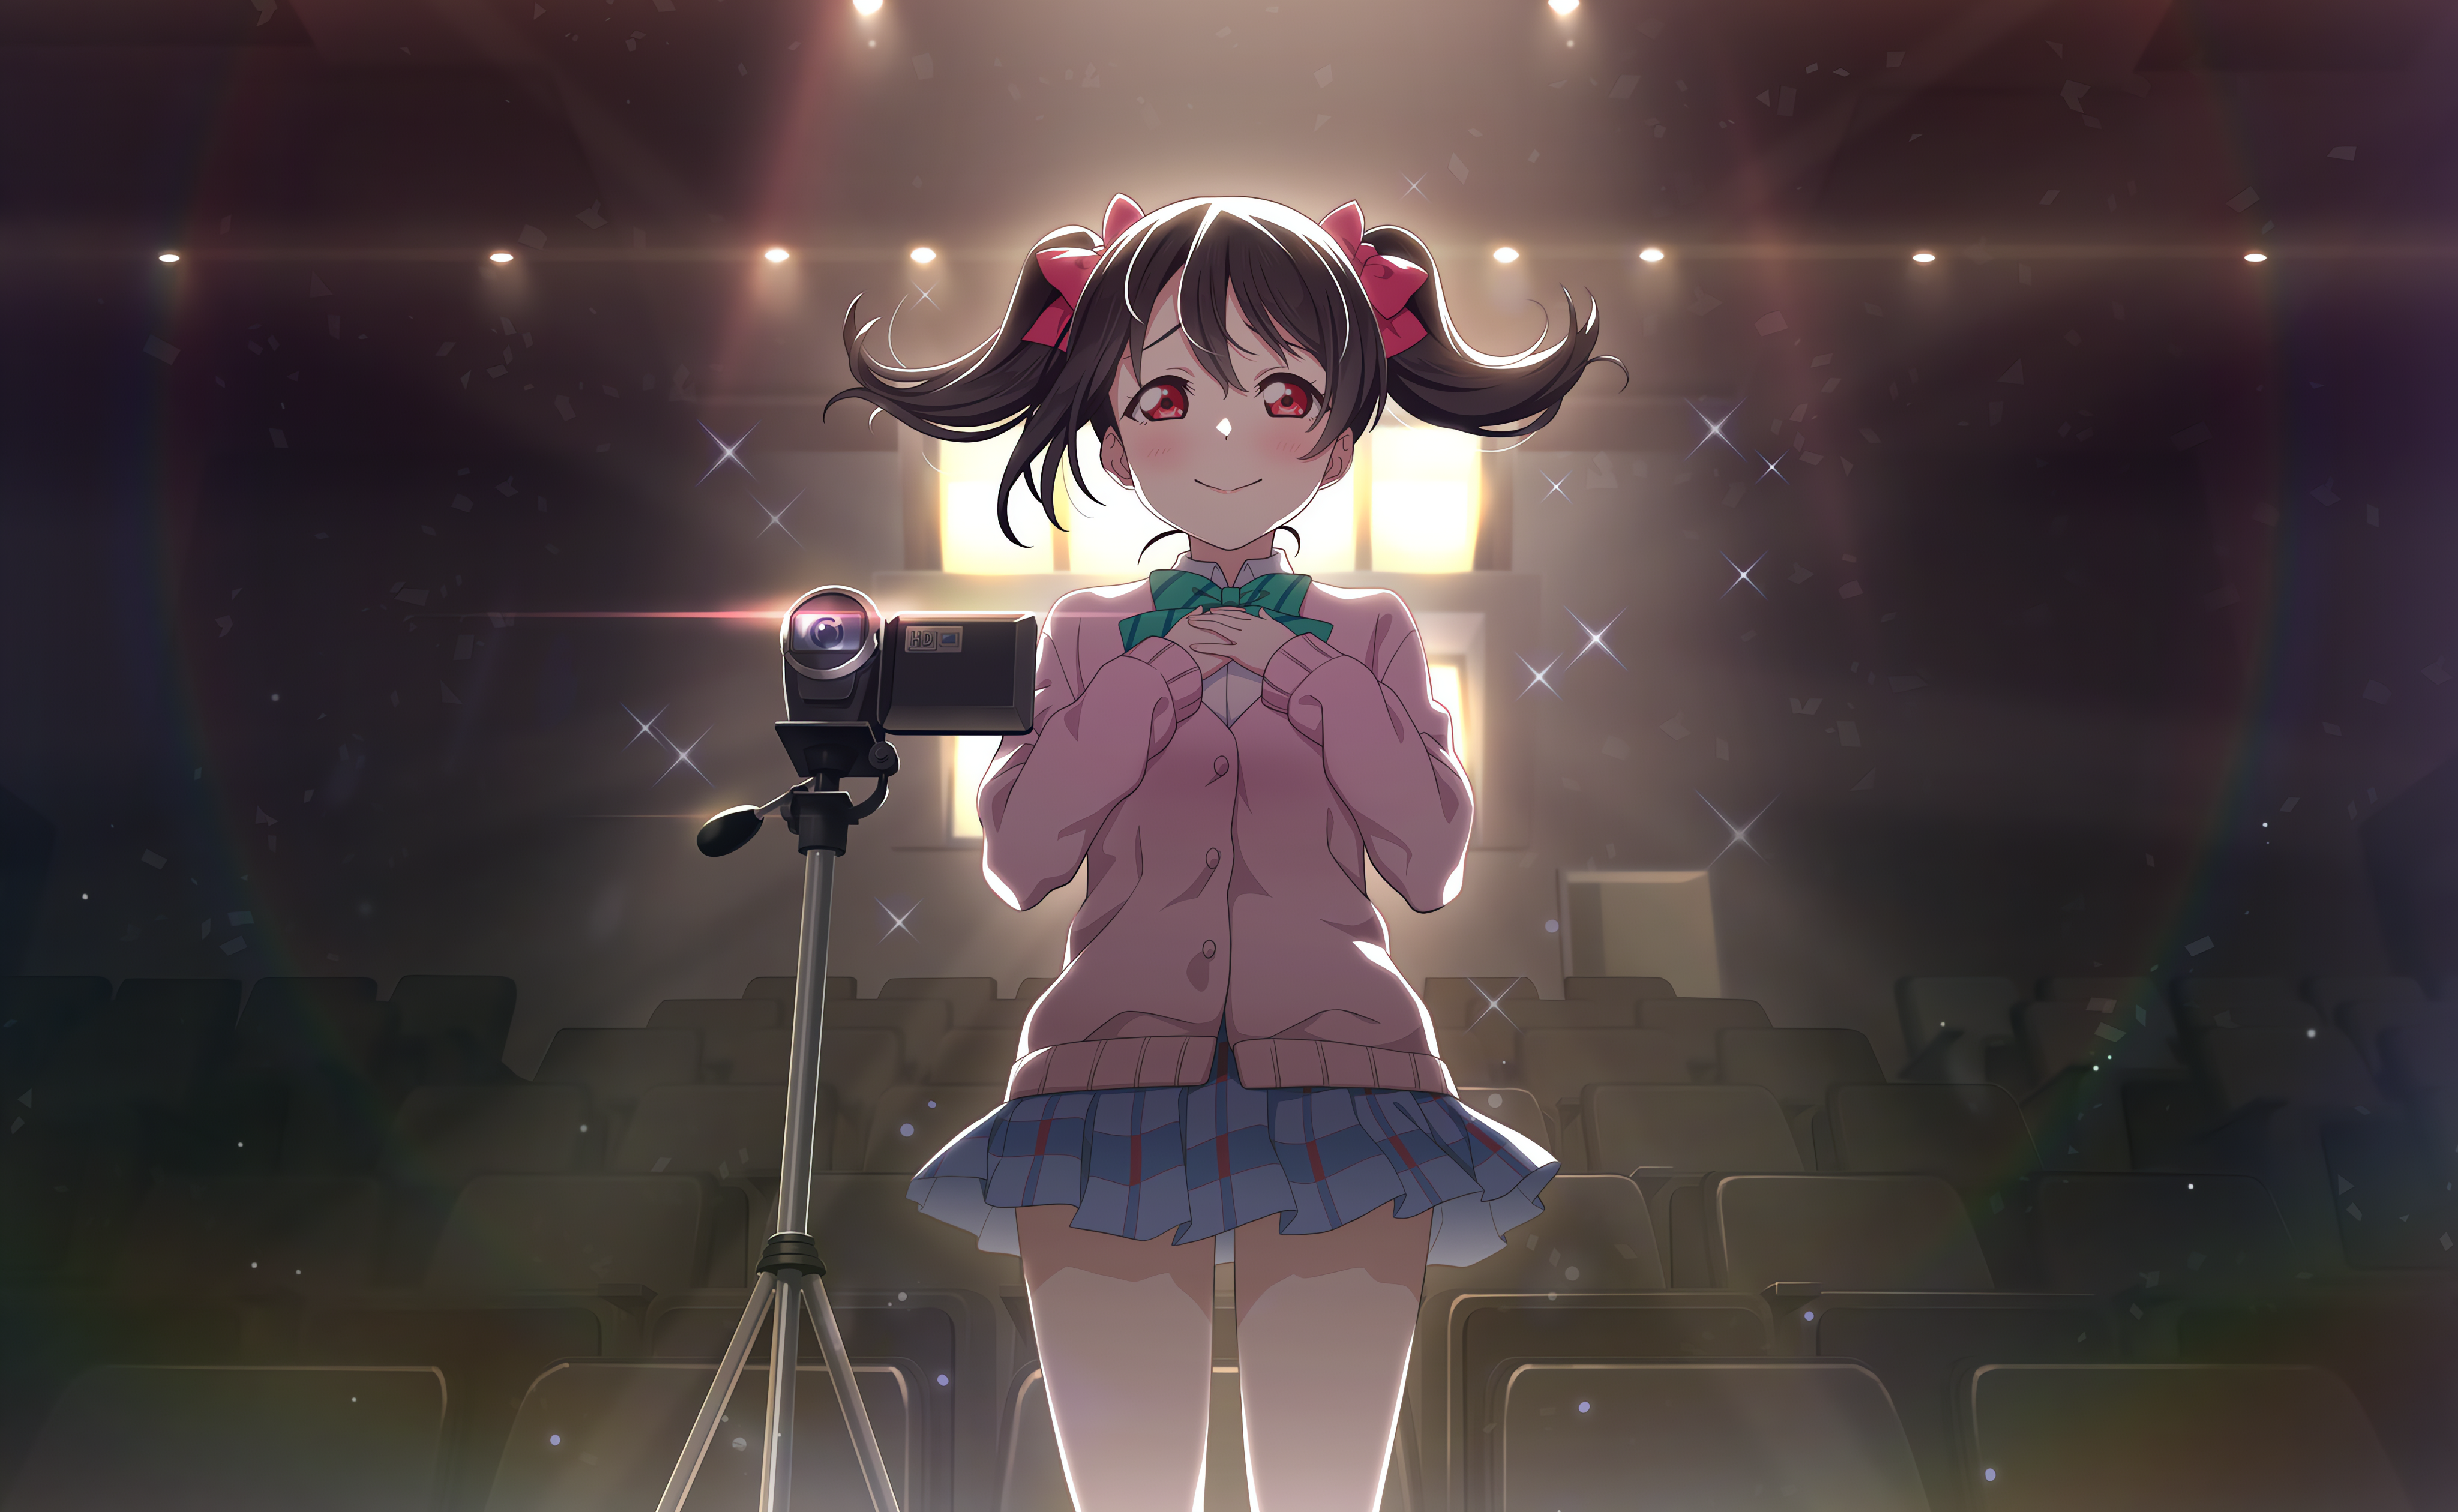 Anime 4096x2520 Yazawa Nico Love Live! anime anime girls schoolgirl school uniform bow tie looking at viewer twintails stars camera lights smiling blushing